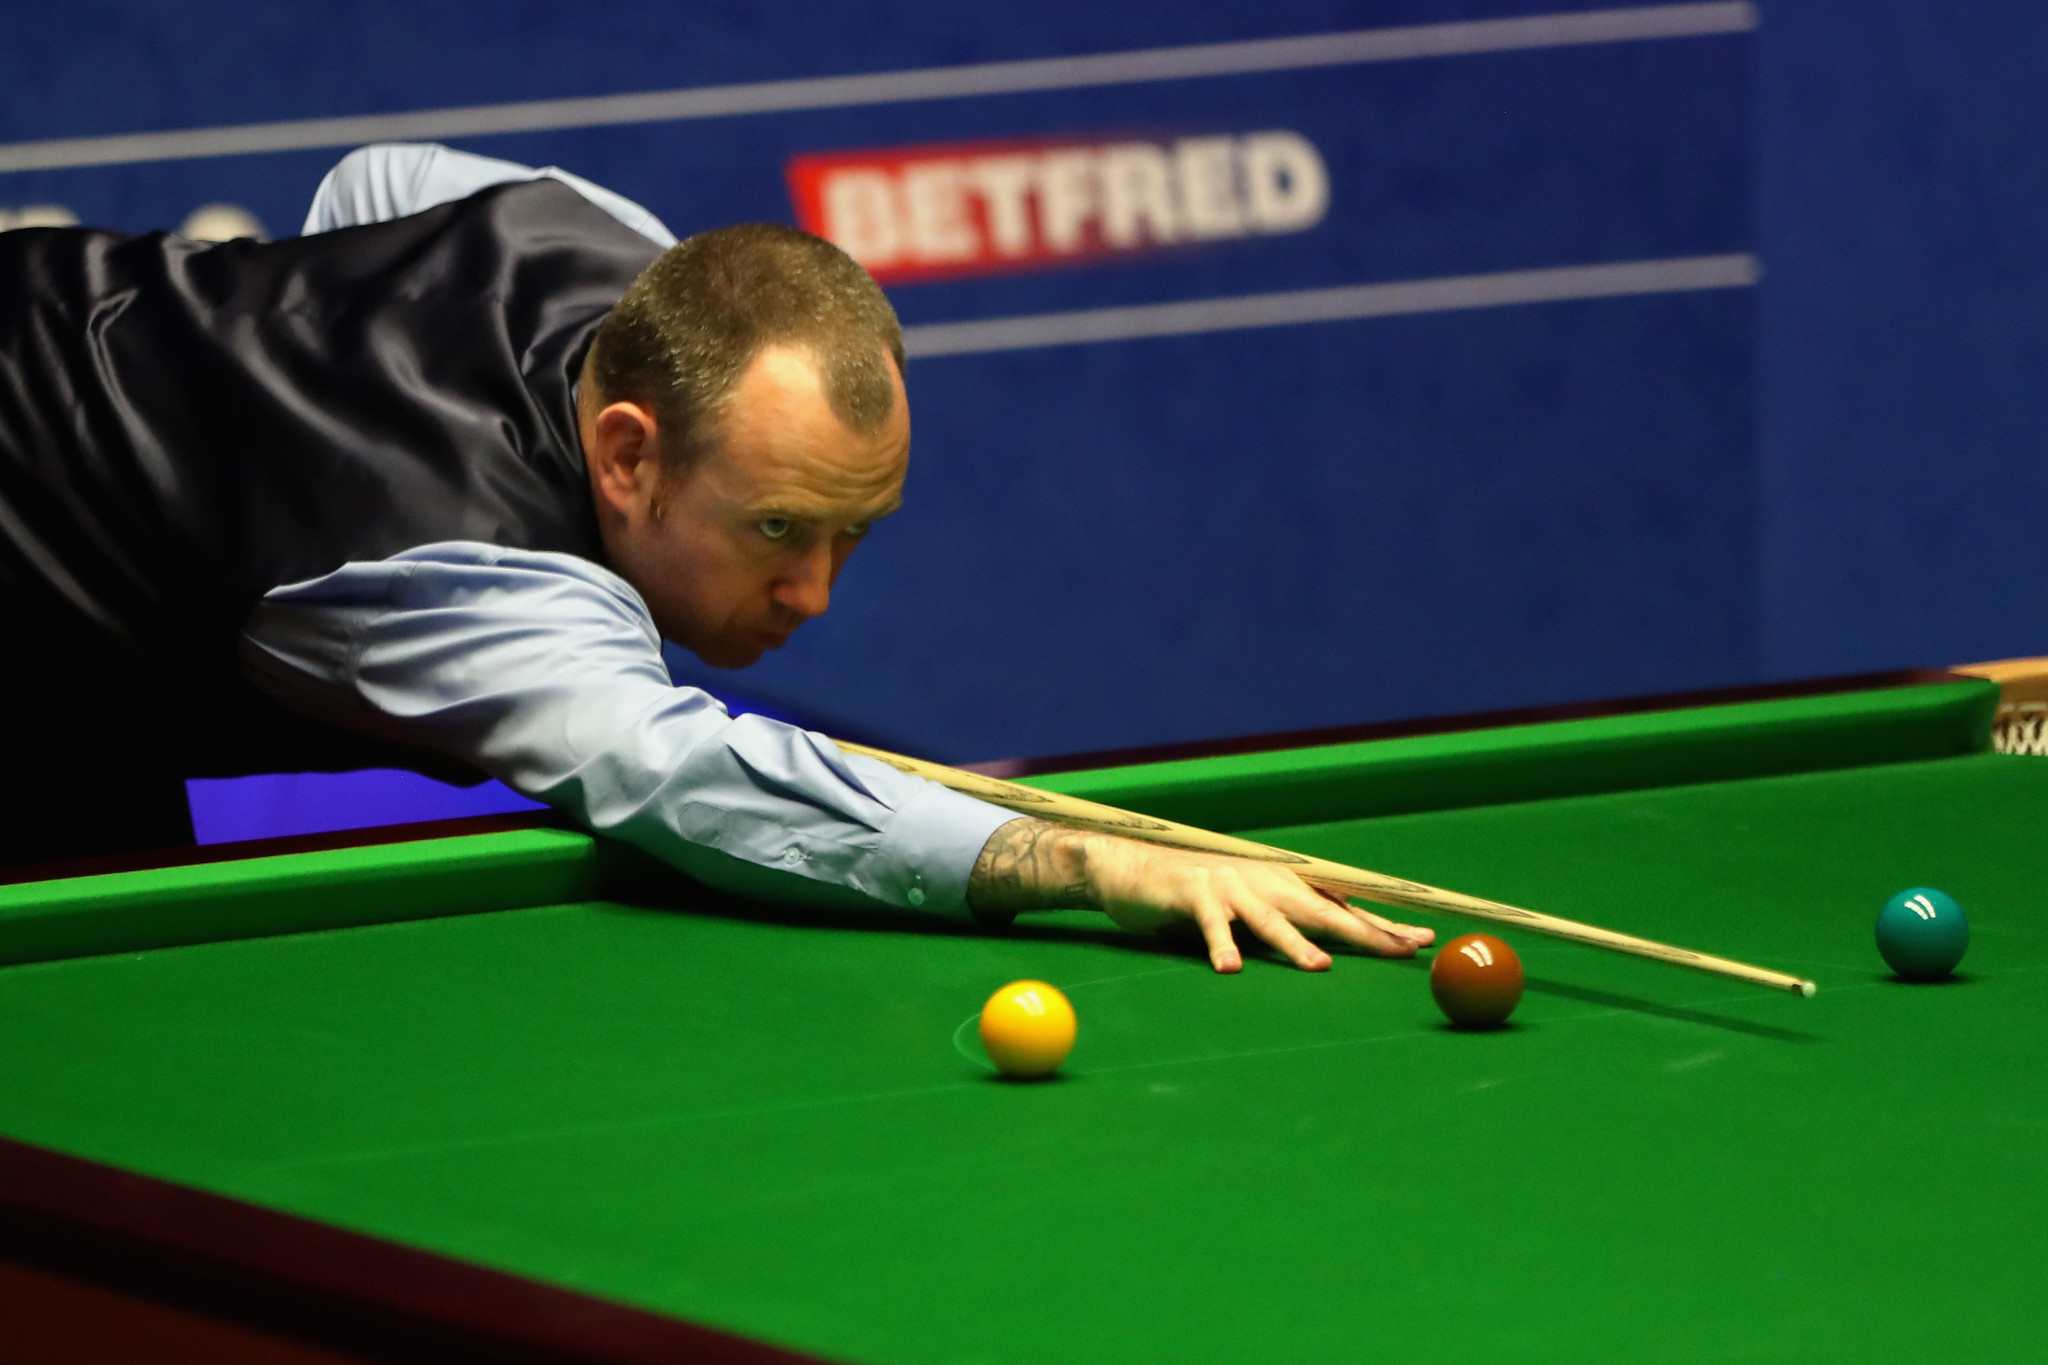 Defending champion Williams progresses into second round of World Snooker Championship